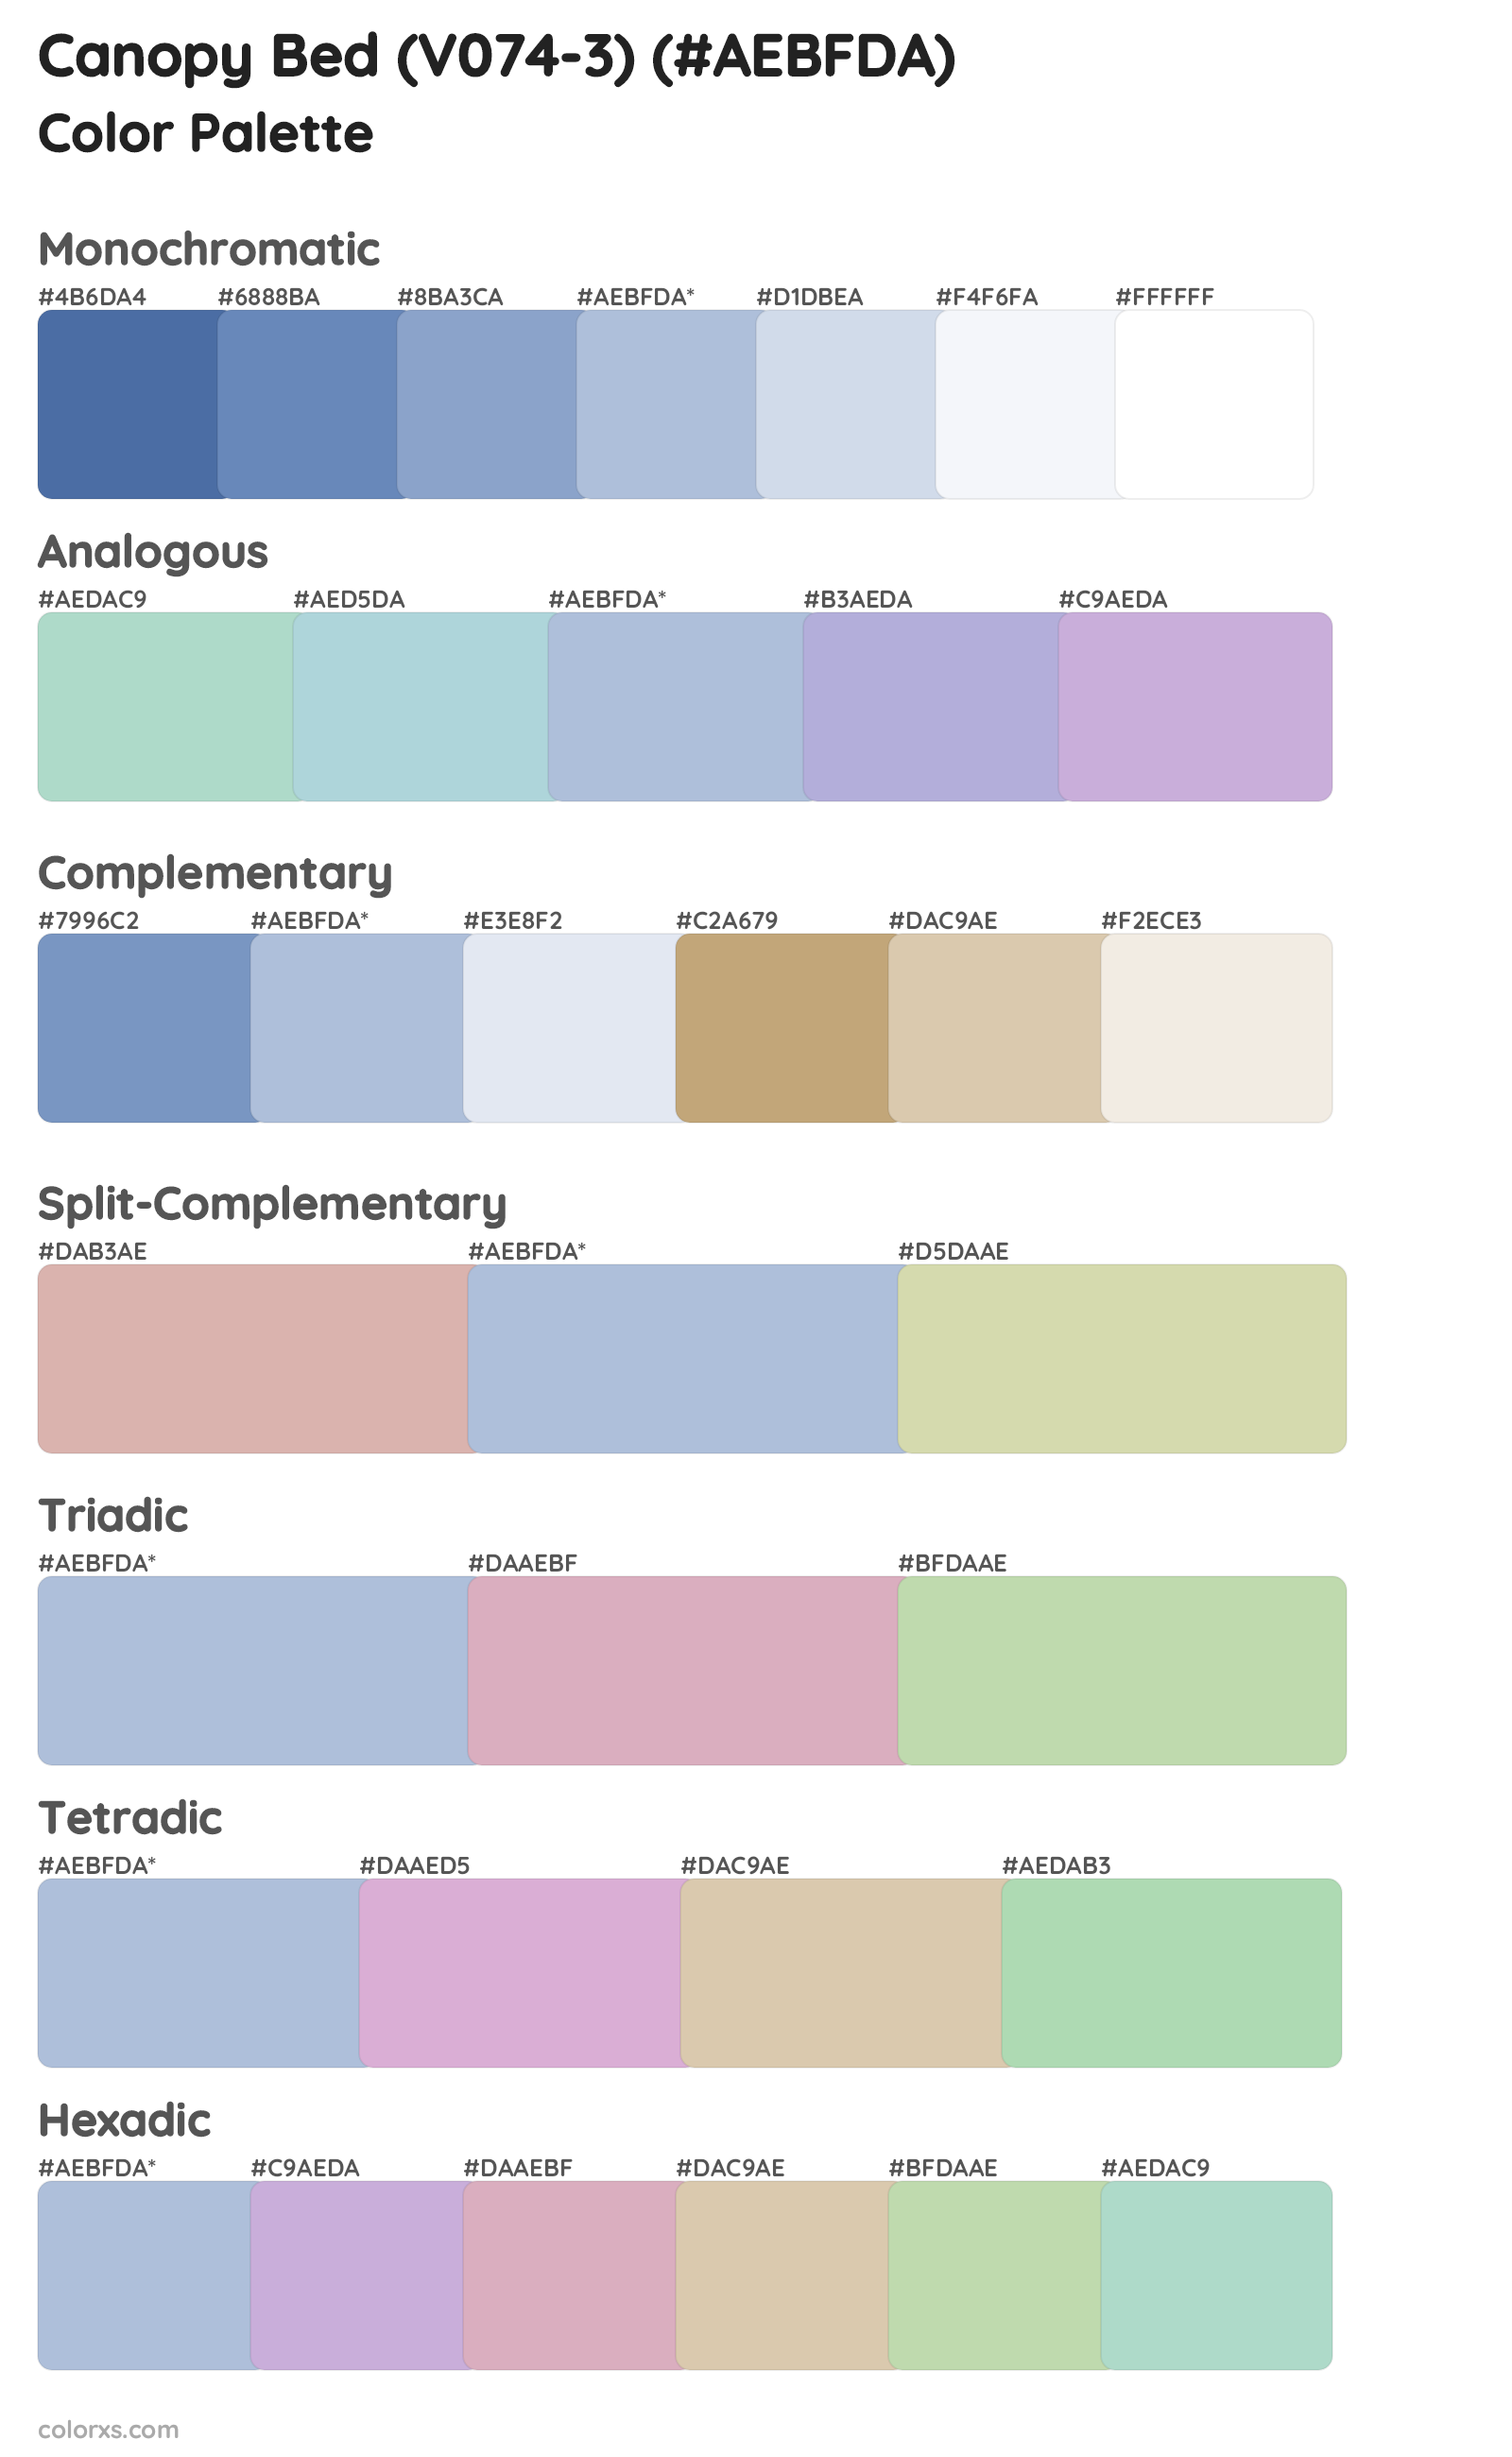 Canopy Bed (V074-3) Color Scheme Palettes